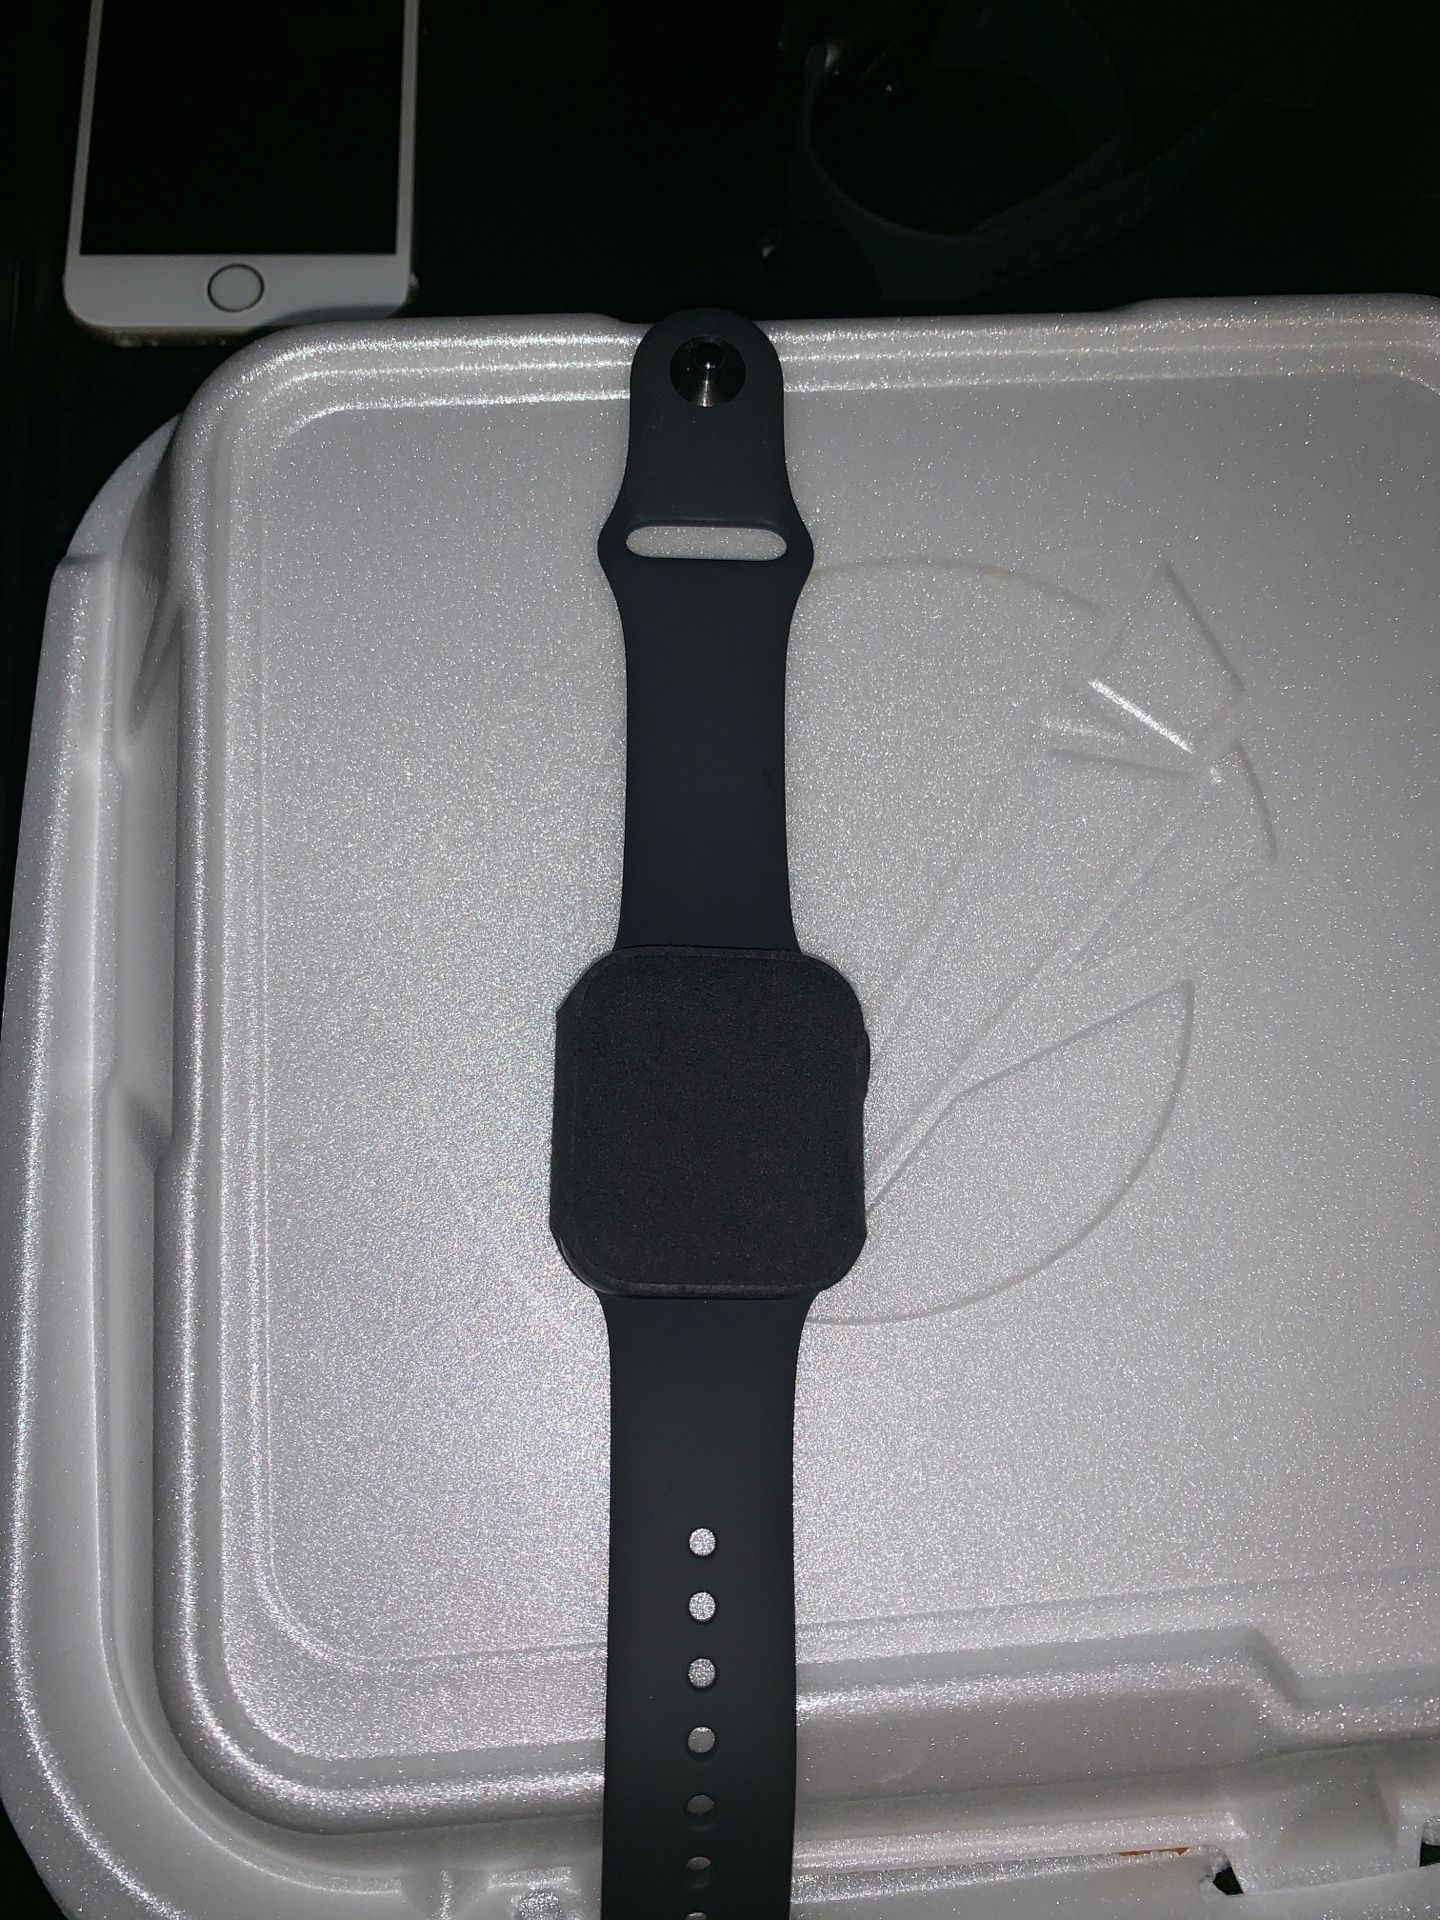 Apple Watch series 4 (GPS)